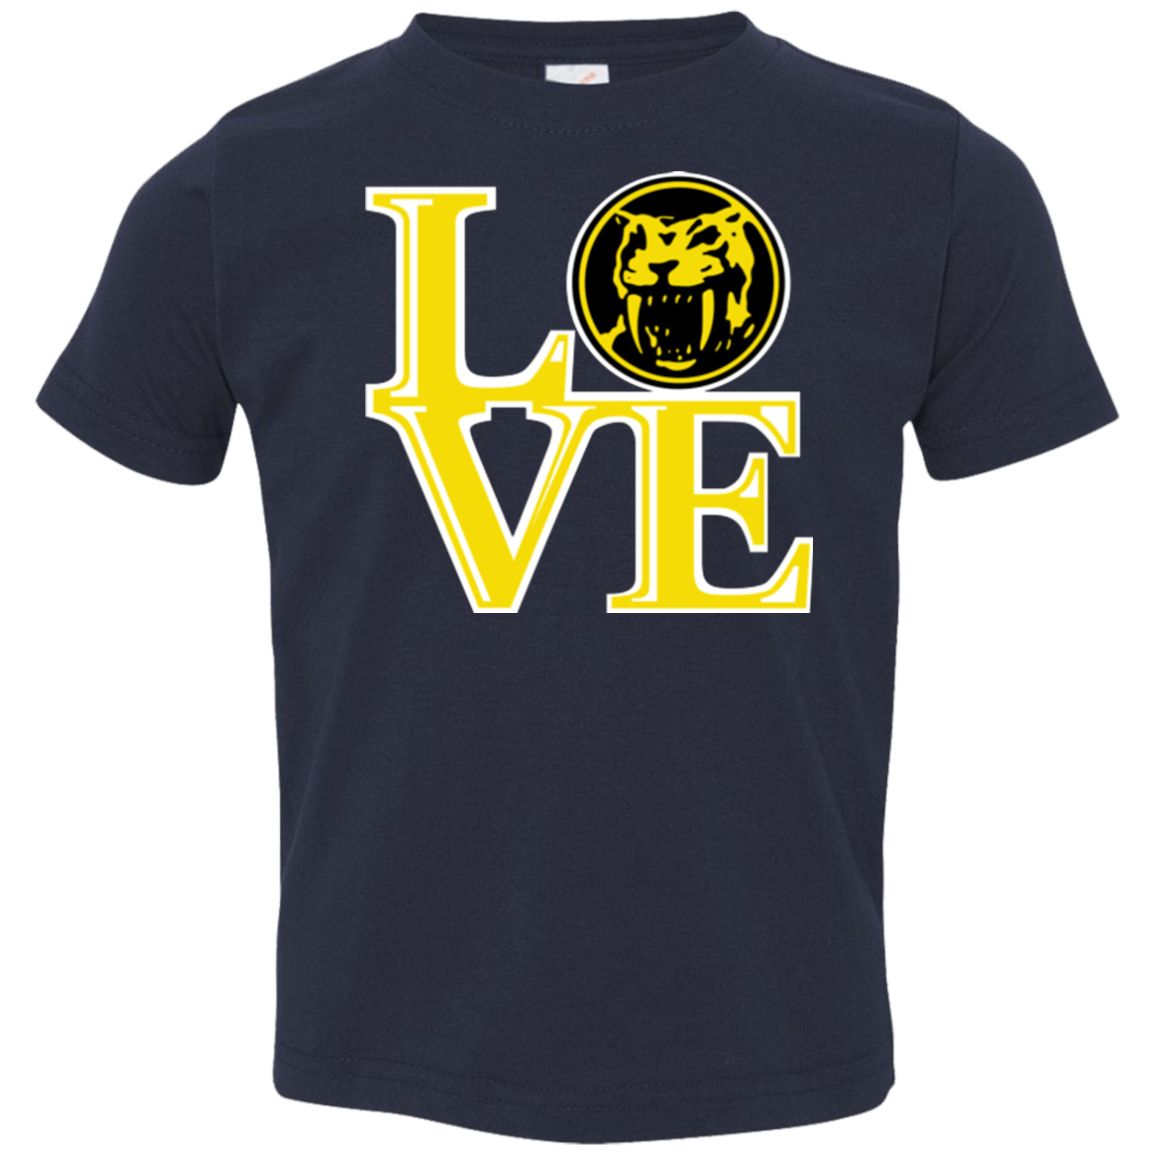 Yellow Ranger LOVE Toddler Premium T-Shirt